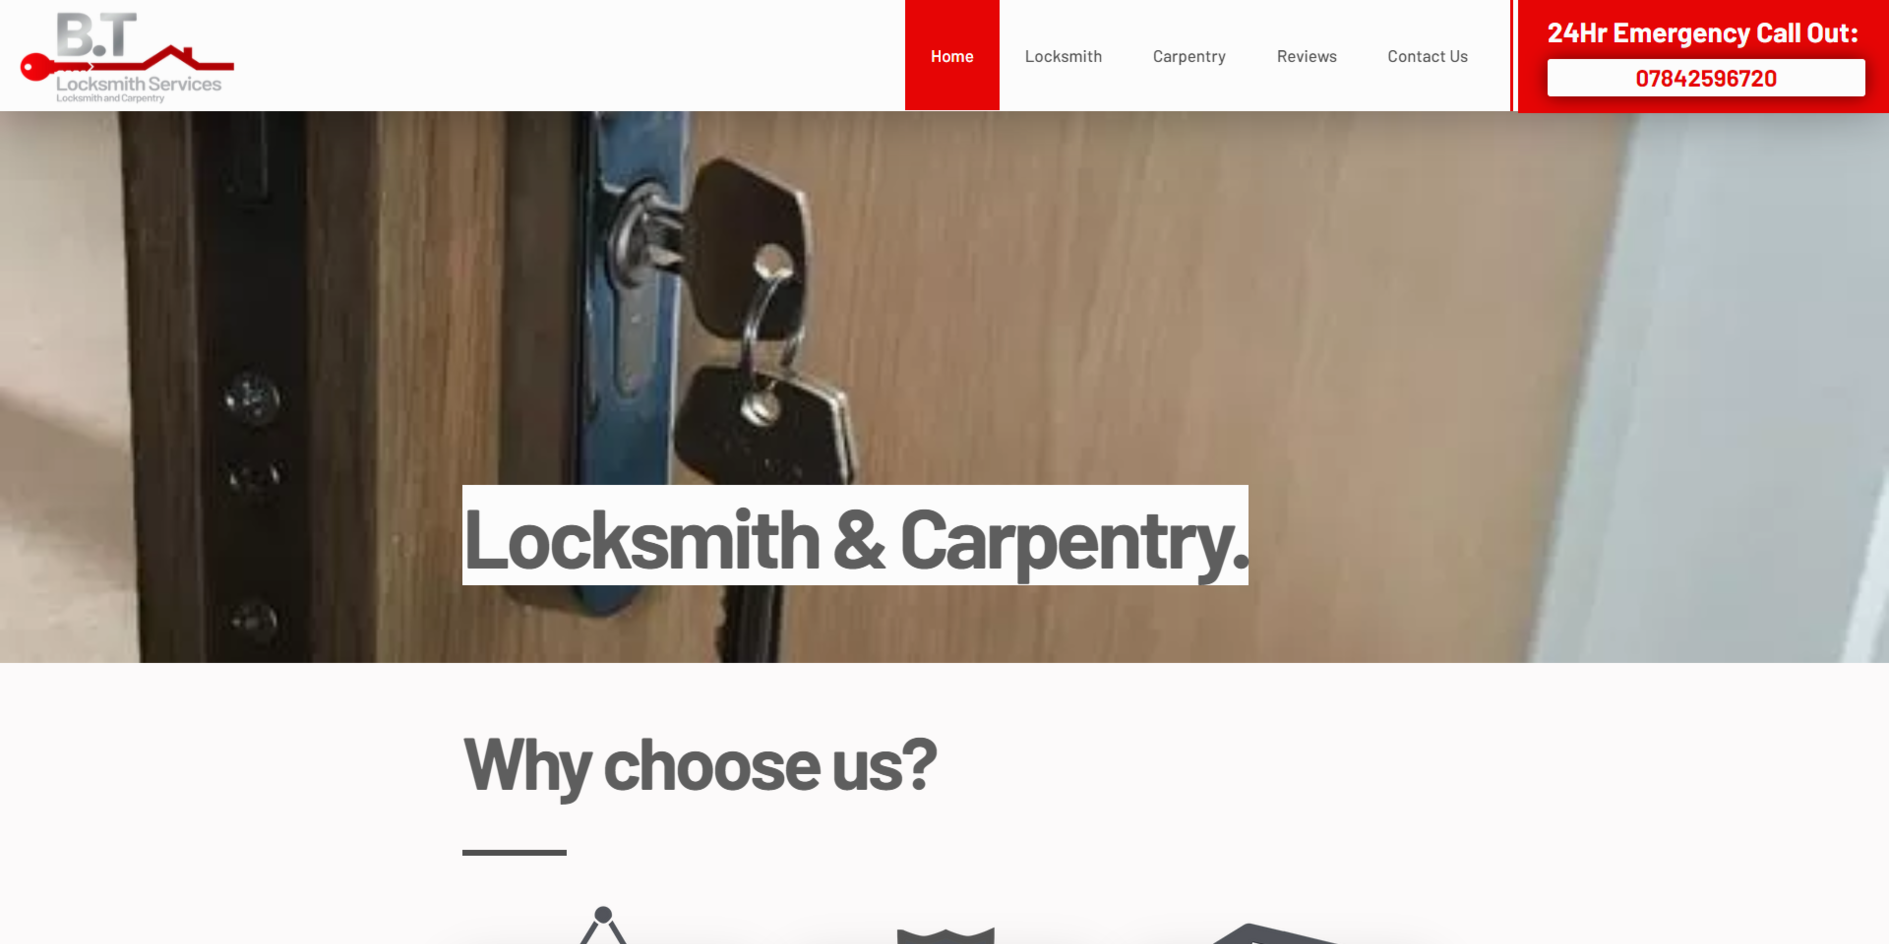 The previous BT Locksmith website shown on desktop